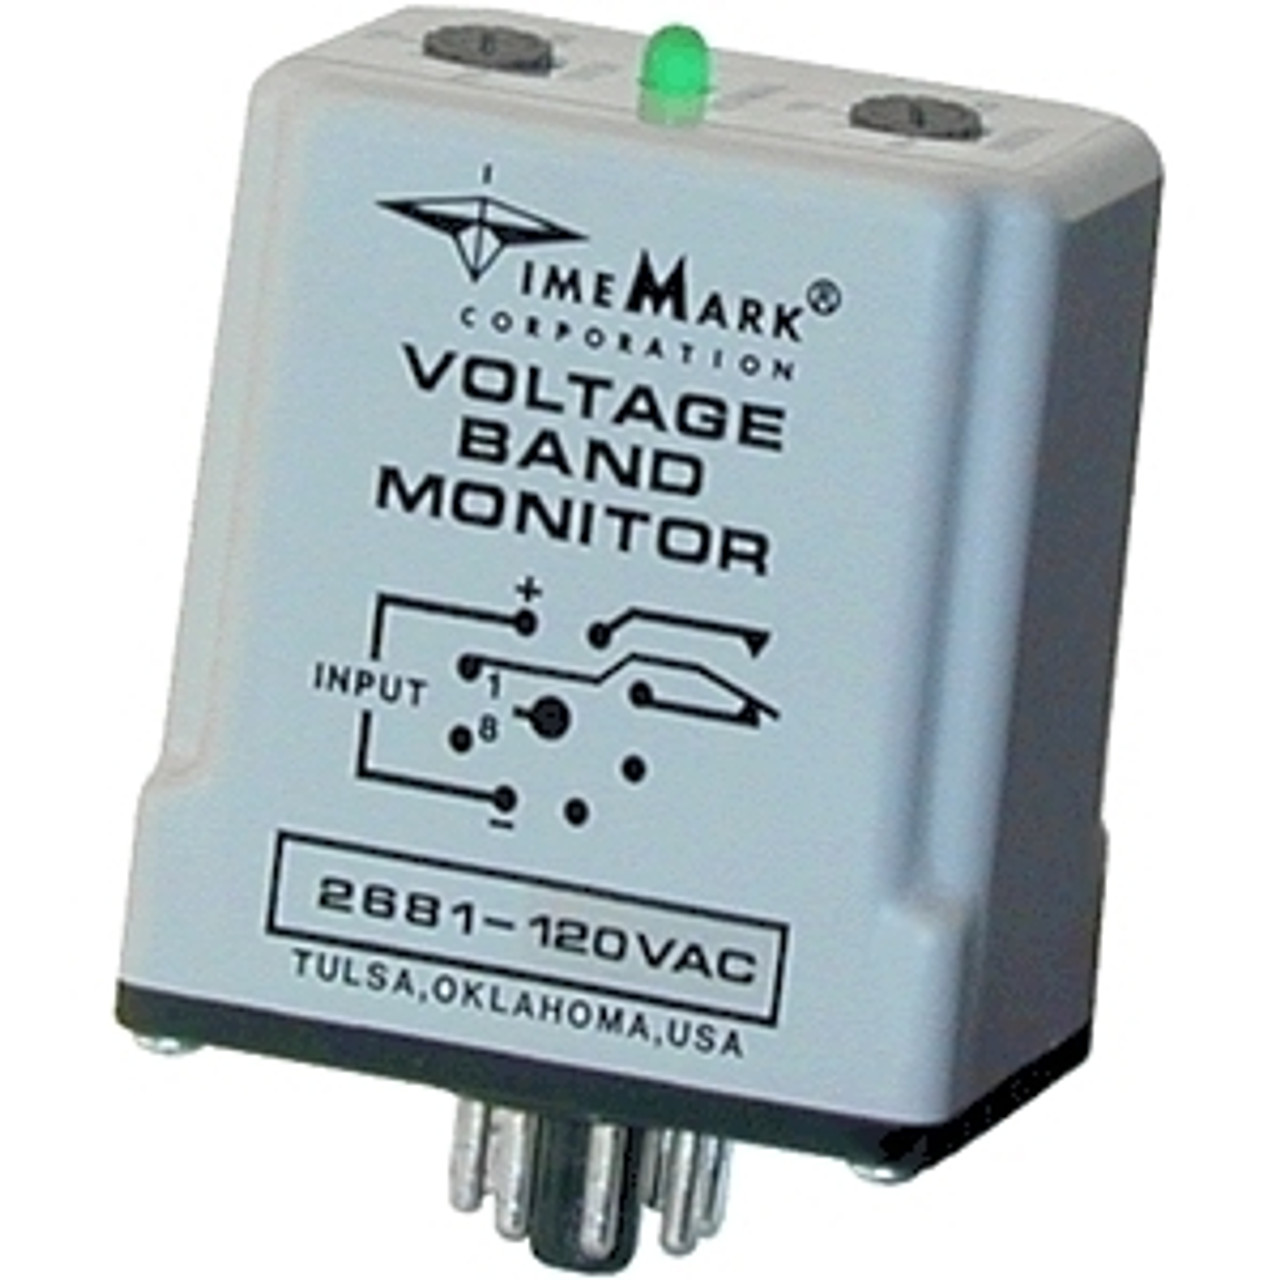 TimeMark 2681-120VAC Voltage Monitor Relays